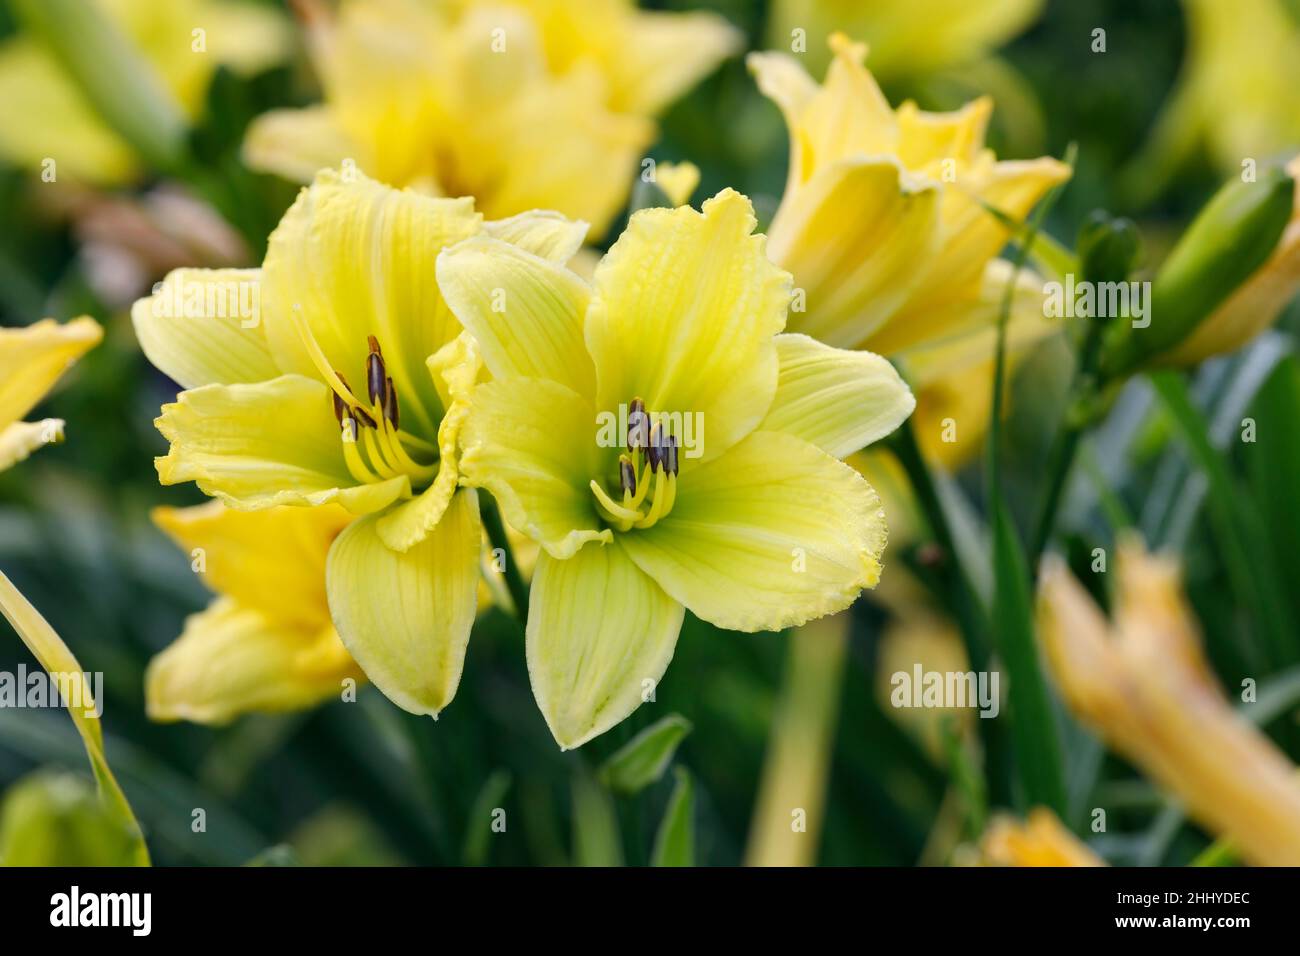 Hemerocallis "Grünen Flattern". Taglilien Blume im Garten. Stockfoto